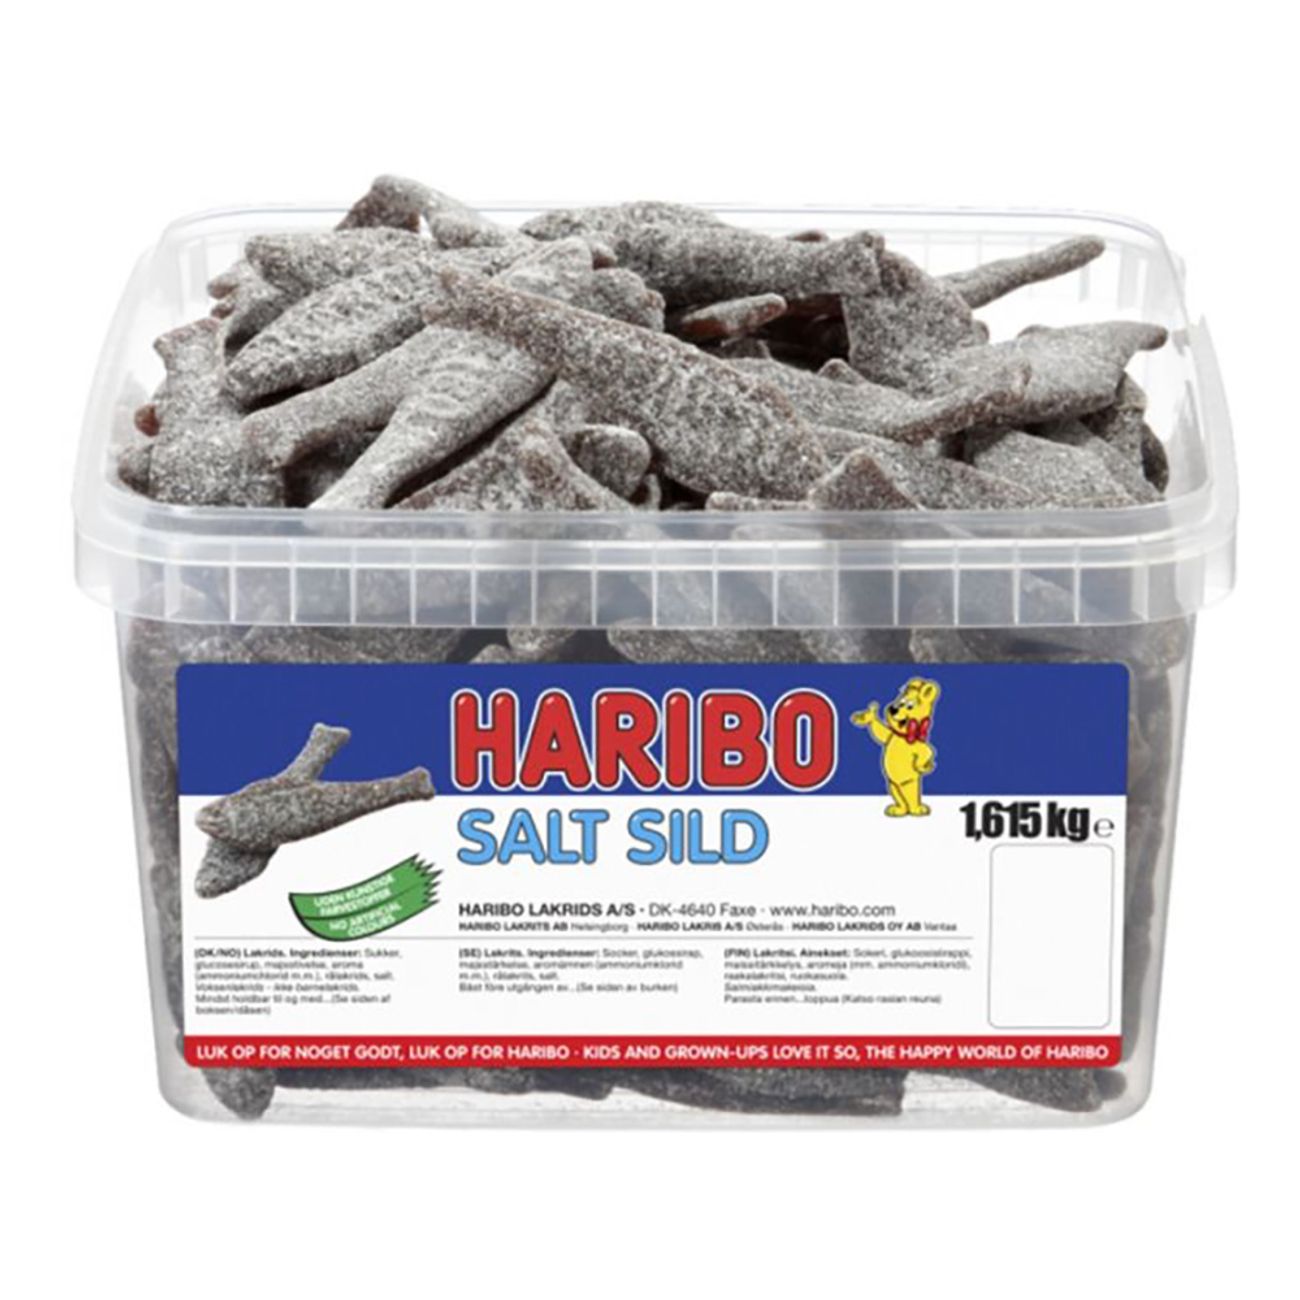 haribo-salt-sild-storpack-78921-2